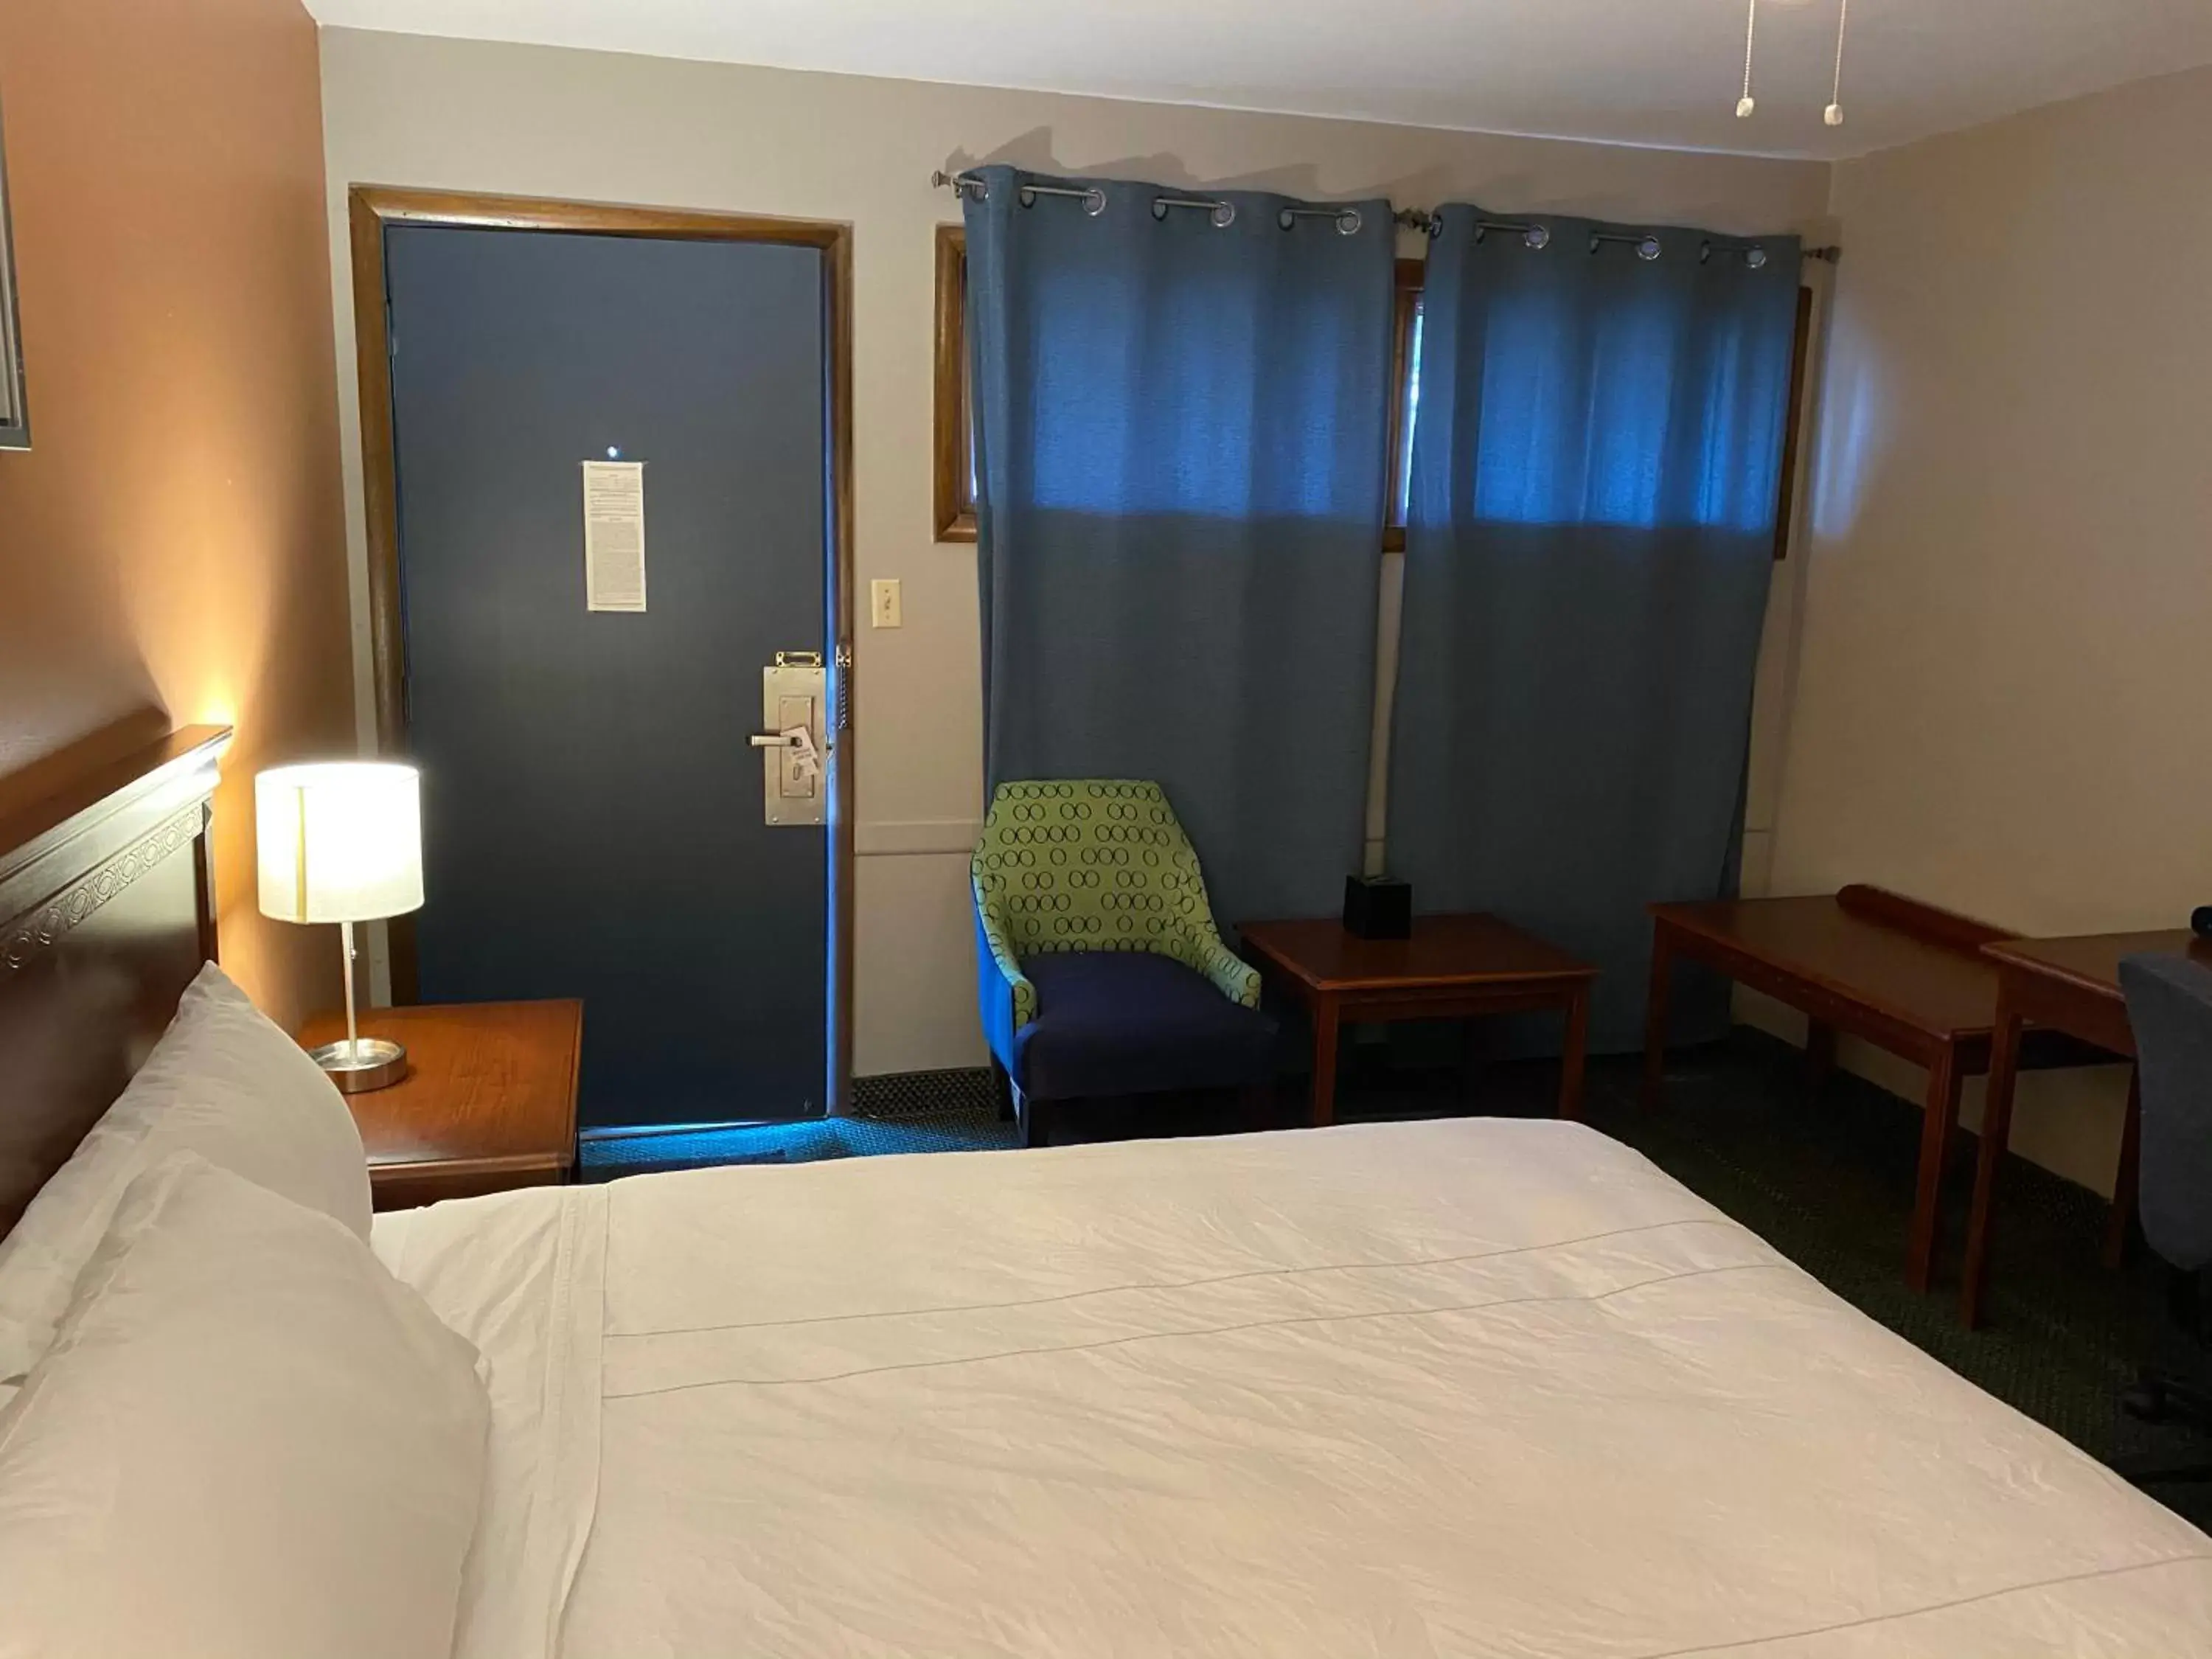 Room Photo in Diamond Motel - Abilene